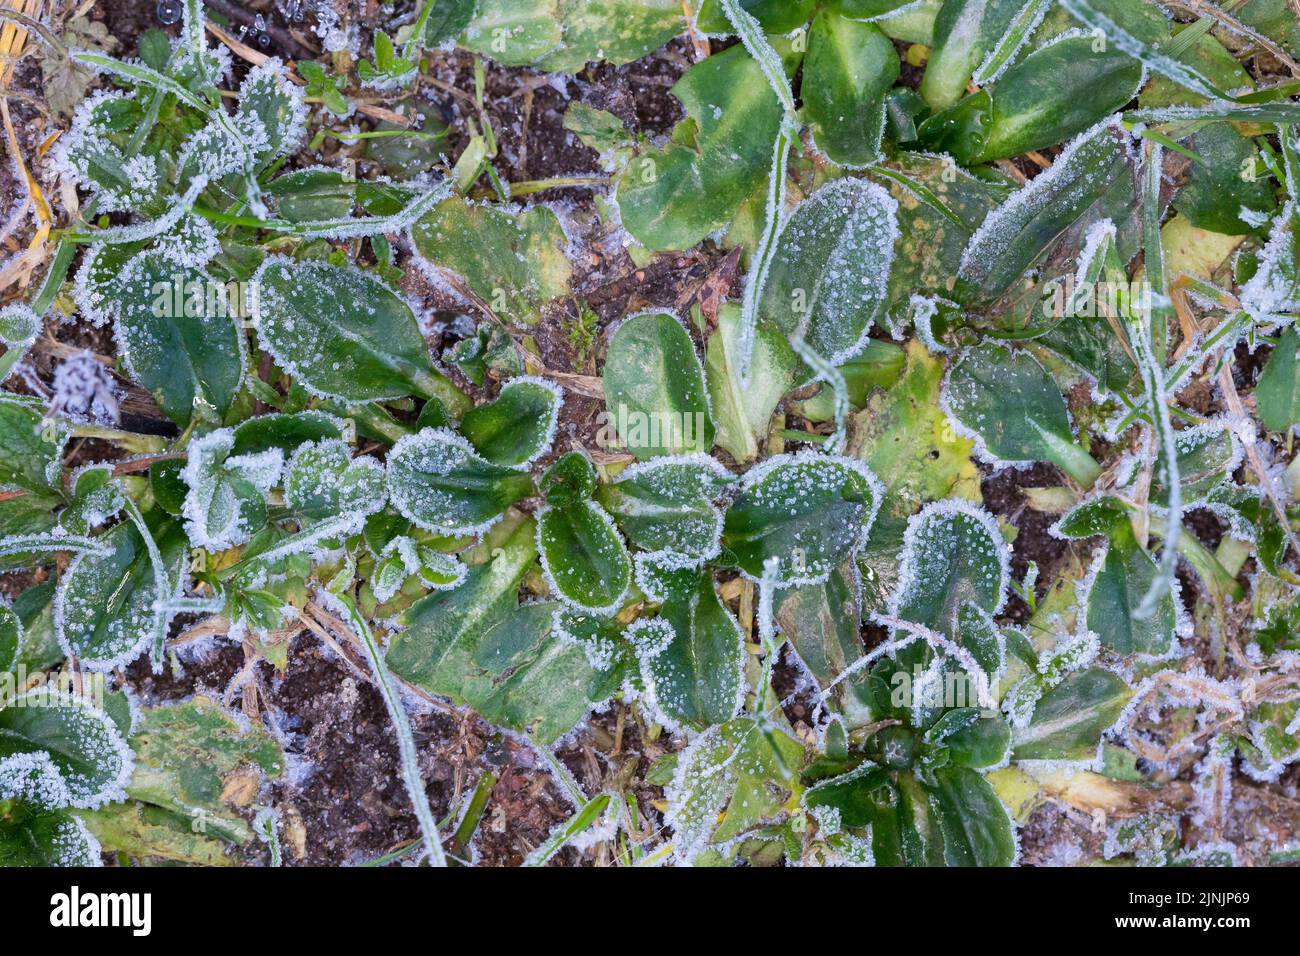 Comune margherita, prato margherite, inglese margherite (Bellis perennis), foglie con brina di bue, Germania Foto Stock